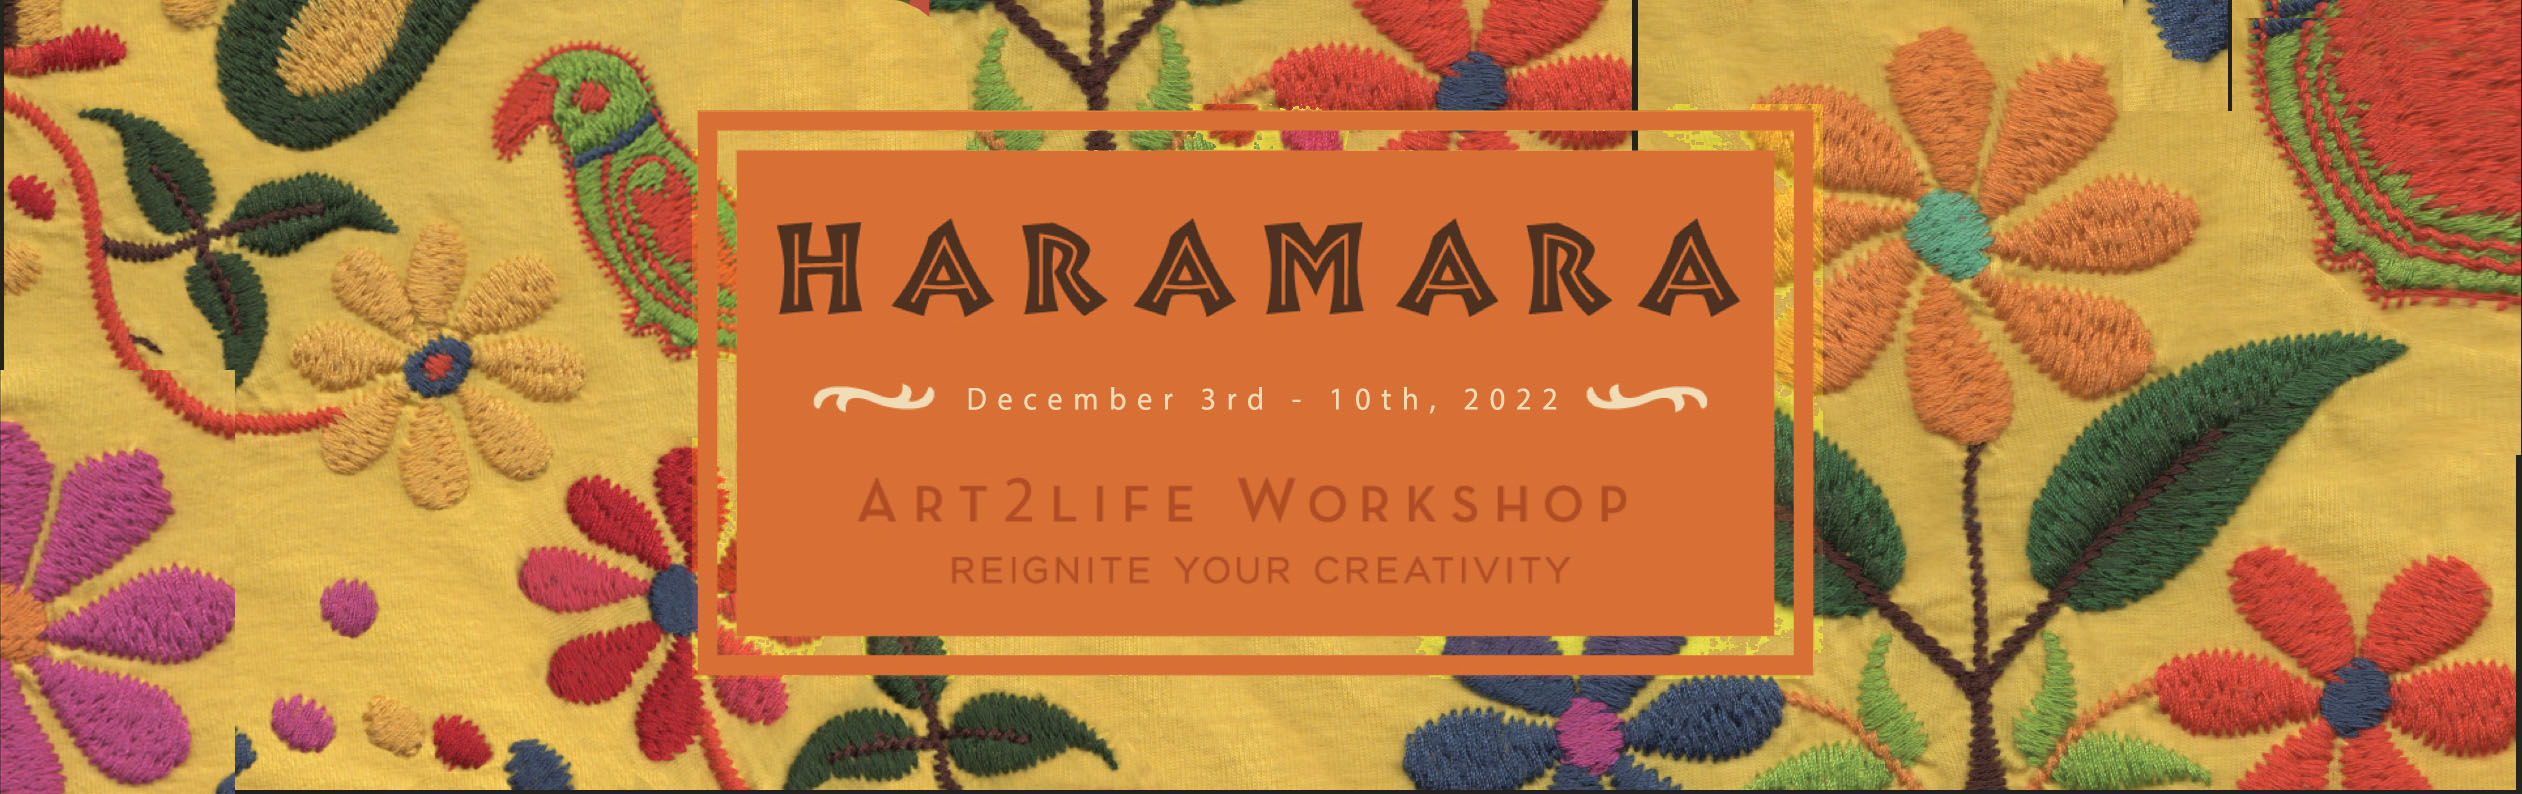 Haramara website banner 2022